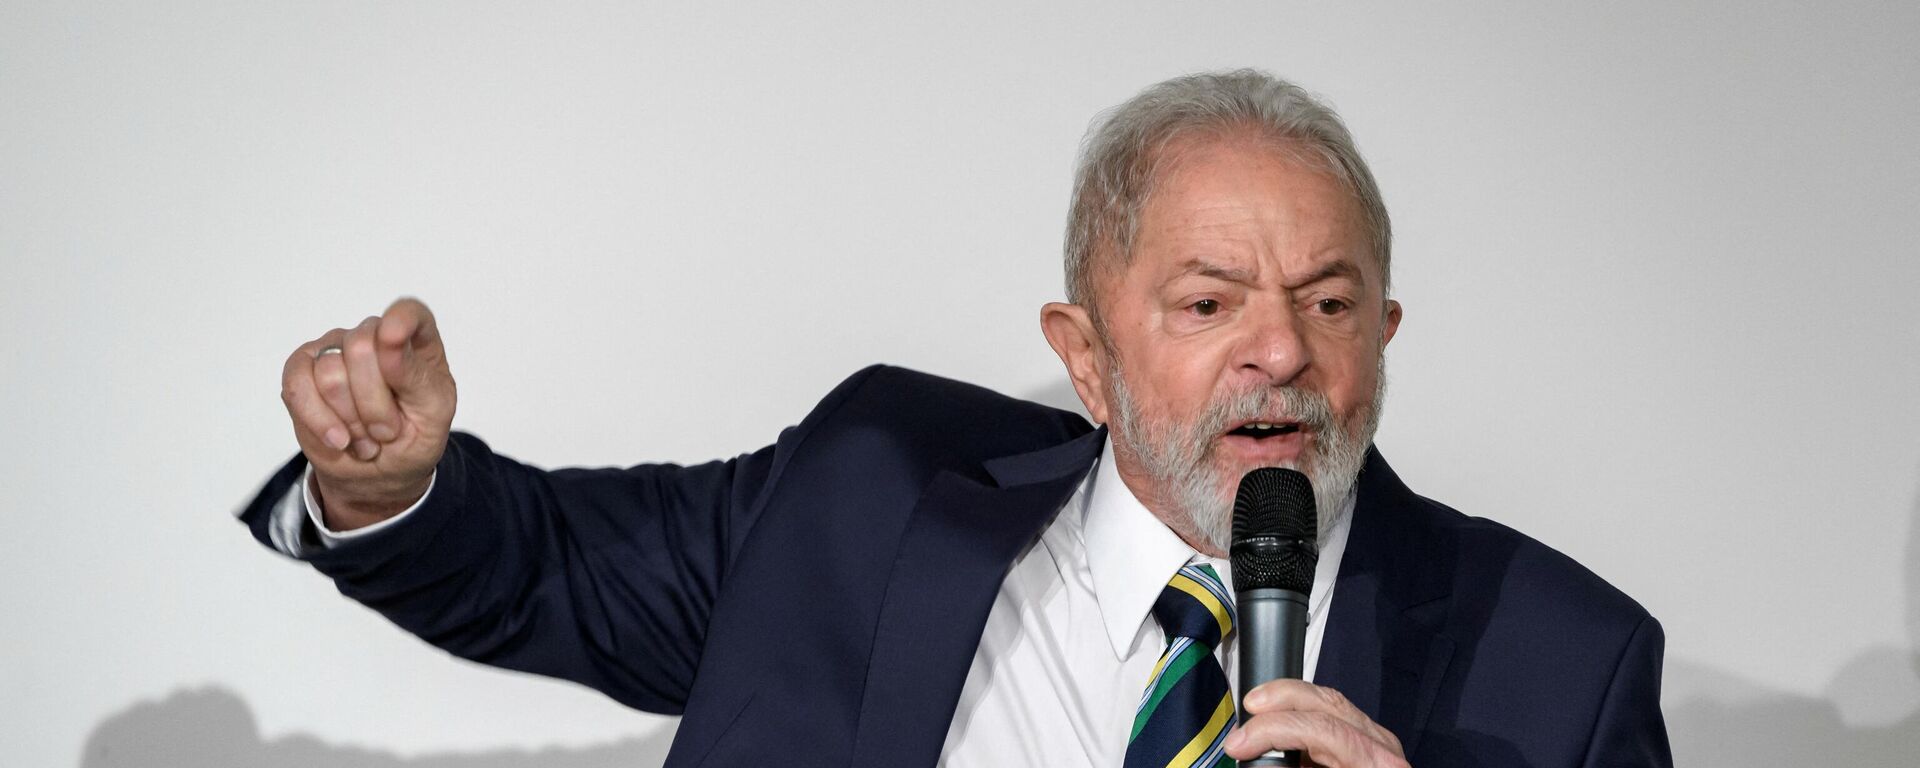 Luiz Inácio Lula da Silva , expresidente de Brasil - Sputnik Mundo, 1920, 20.07.2021